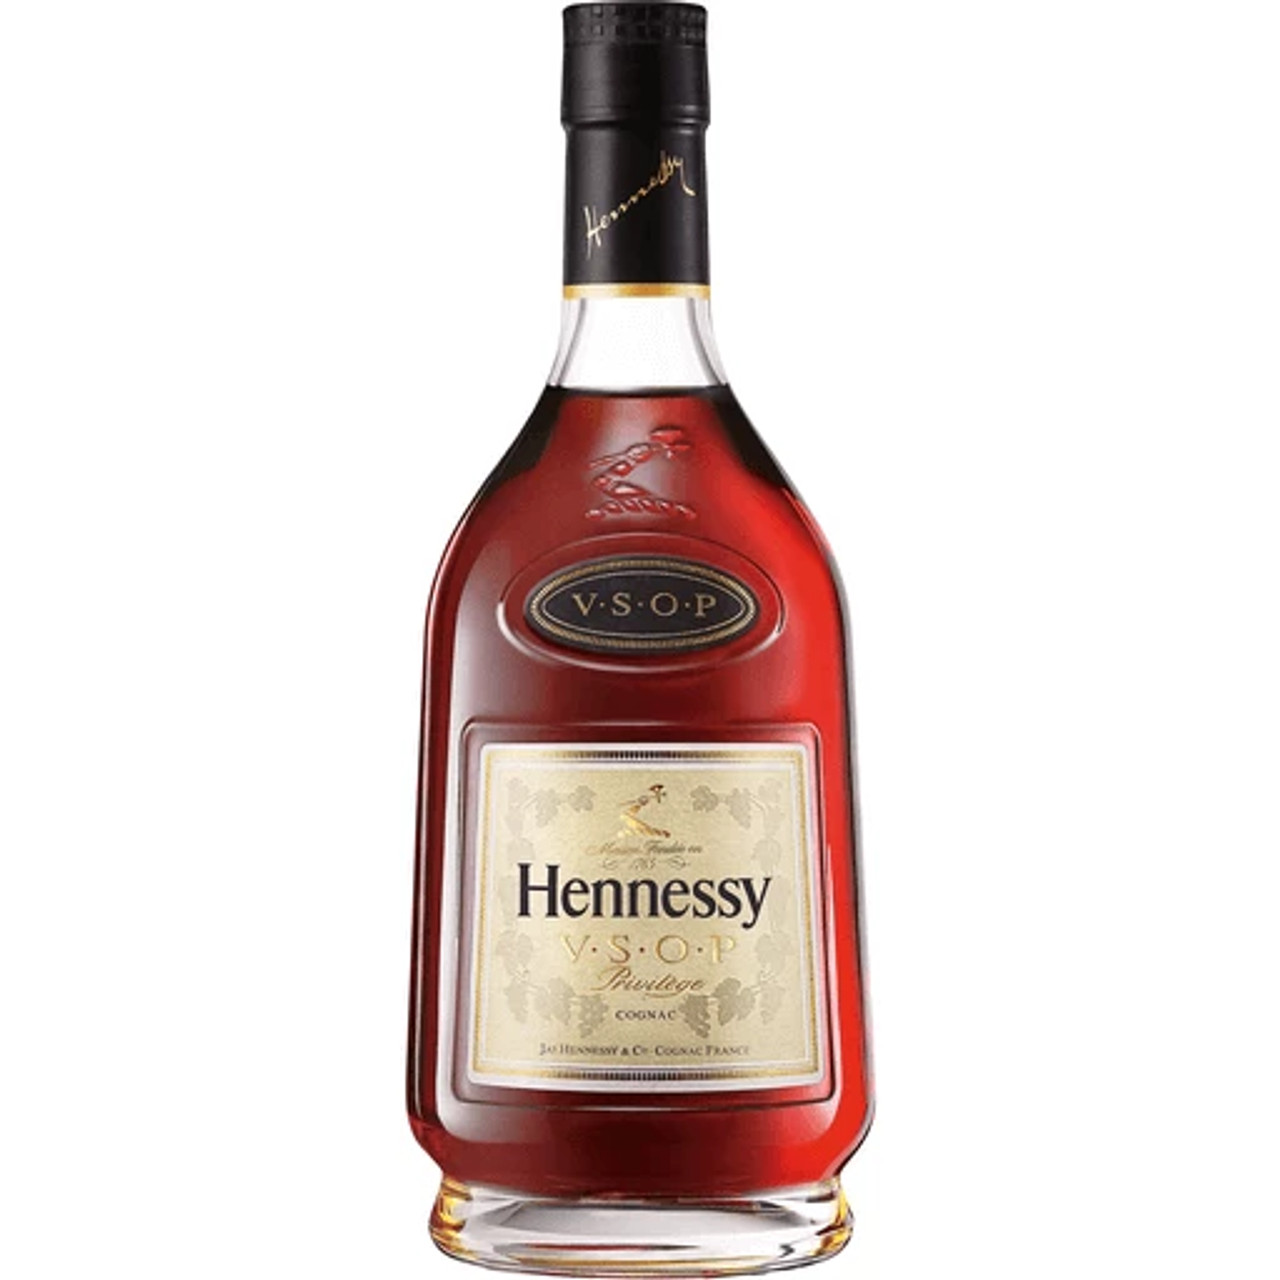  Hennessy VSOP Privilege Cognac (50 ML) 